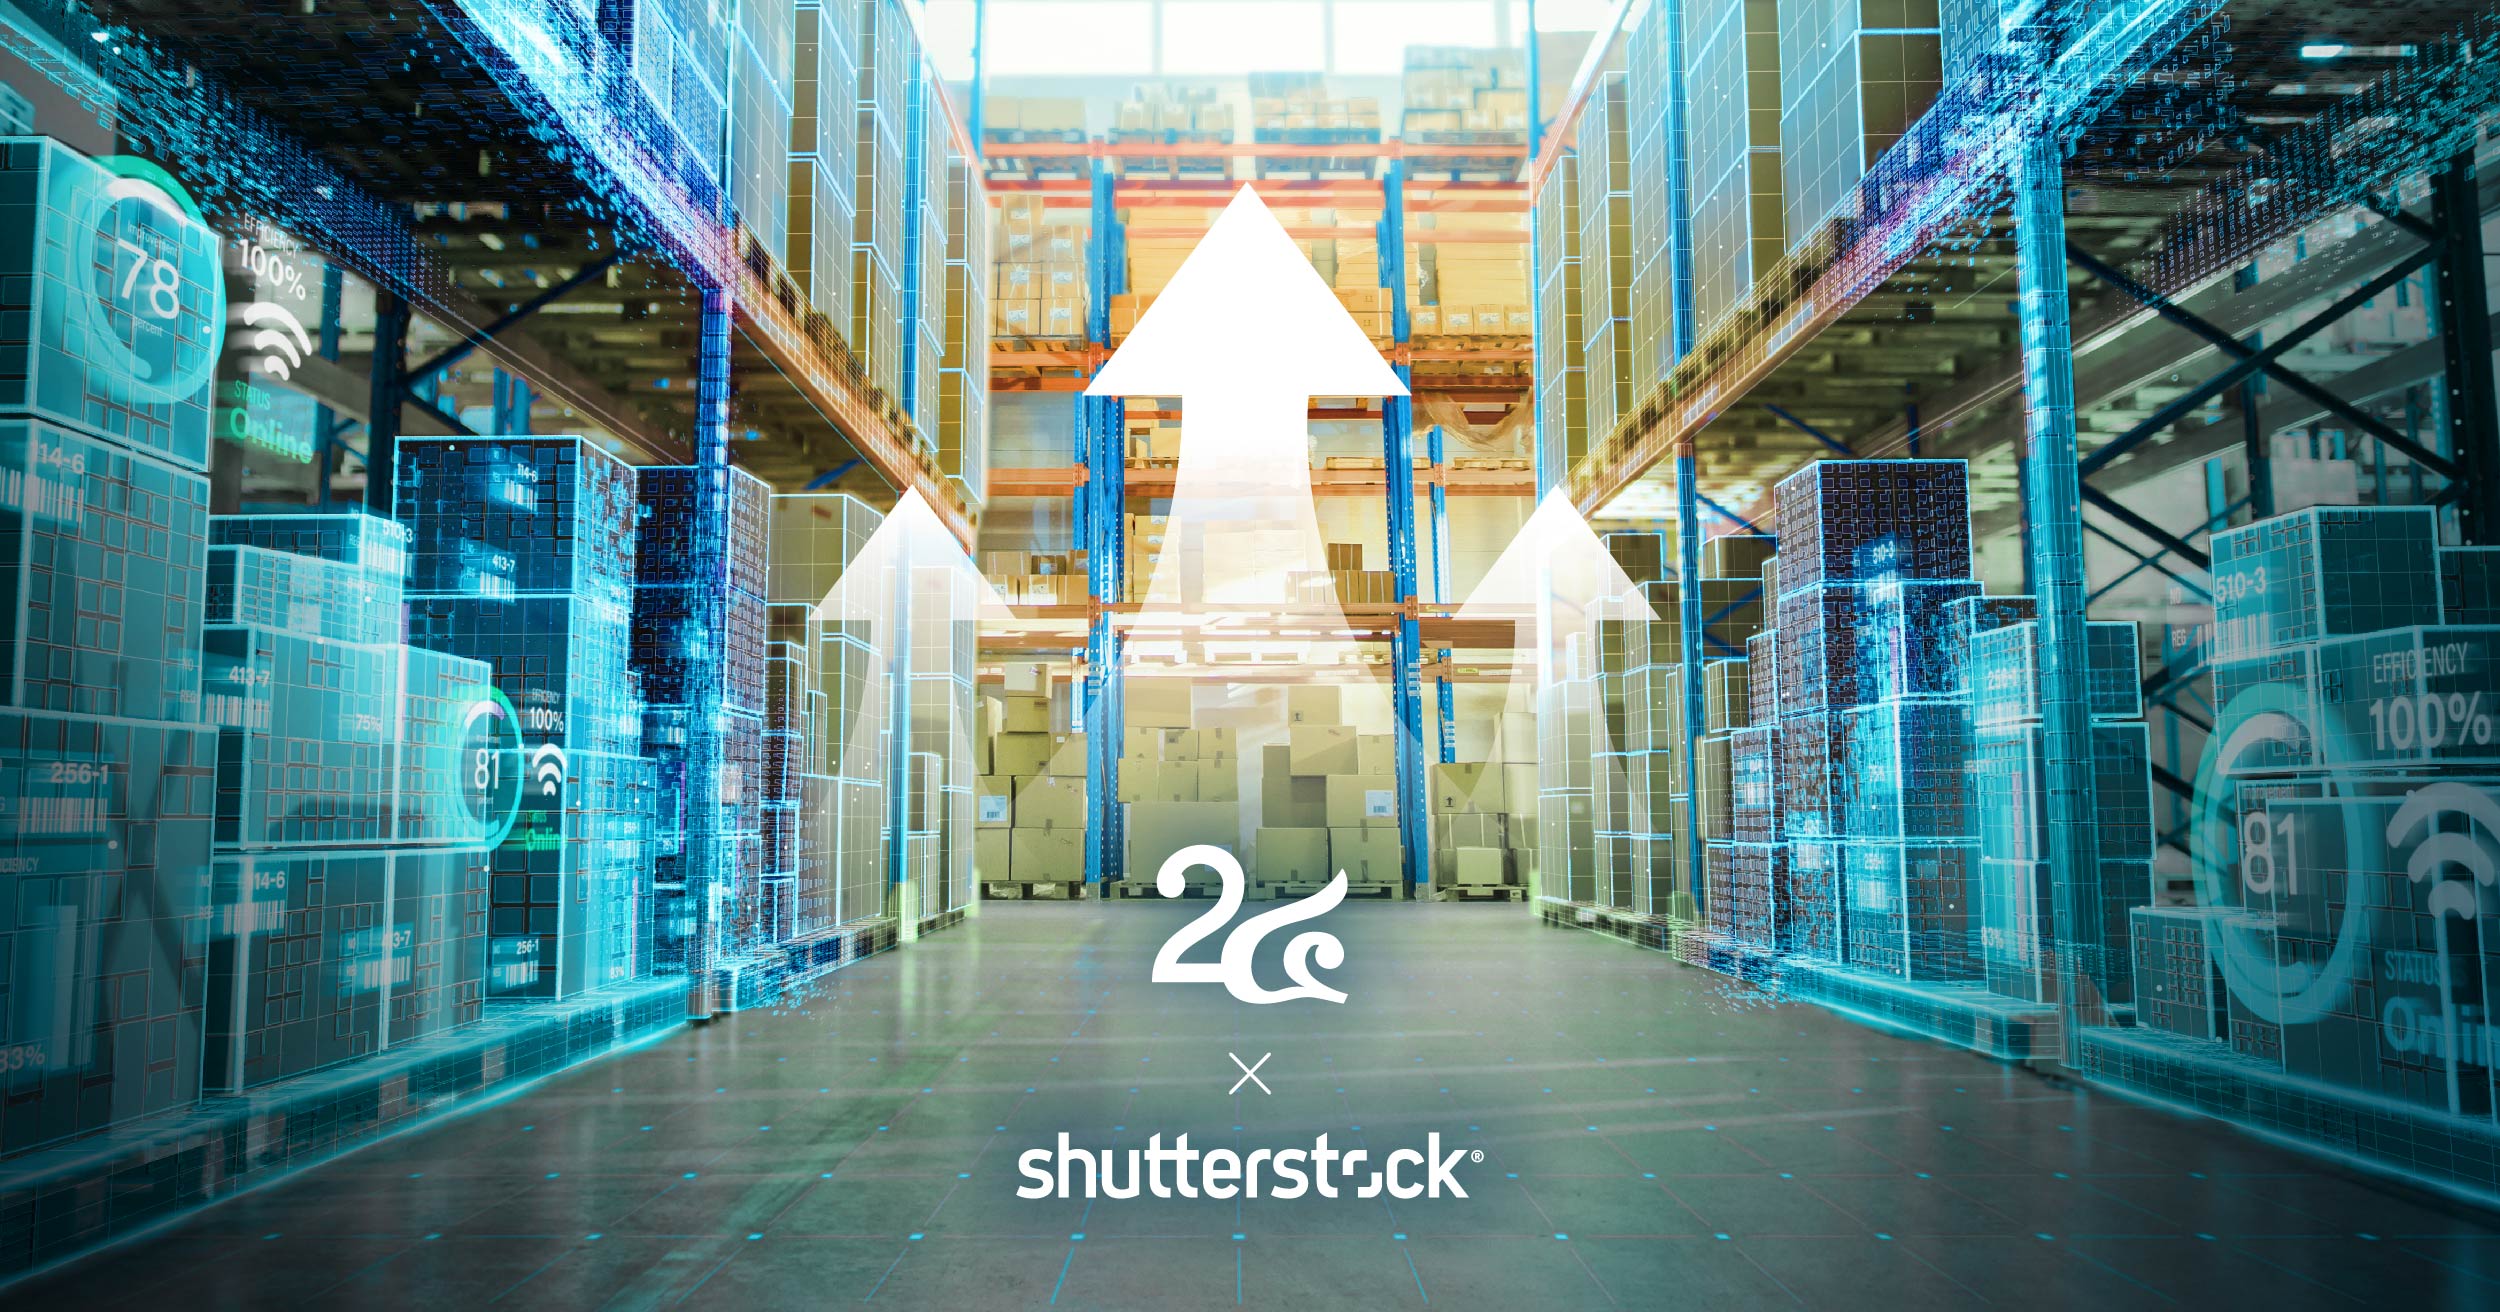 Number 24 x Shutterstock เปิดตัวบริการ Computer Vision เทรน AI